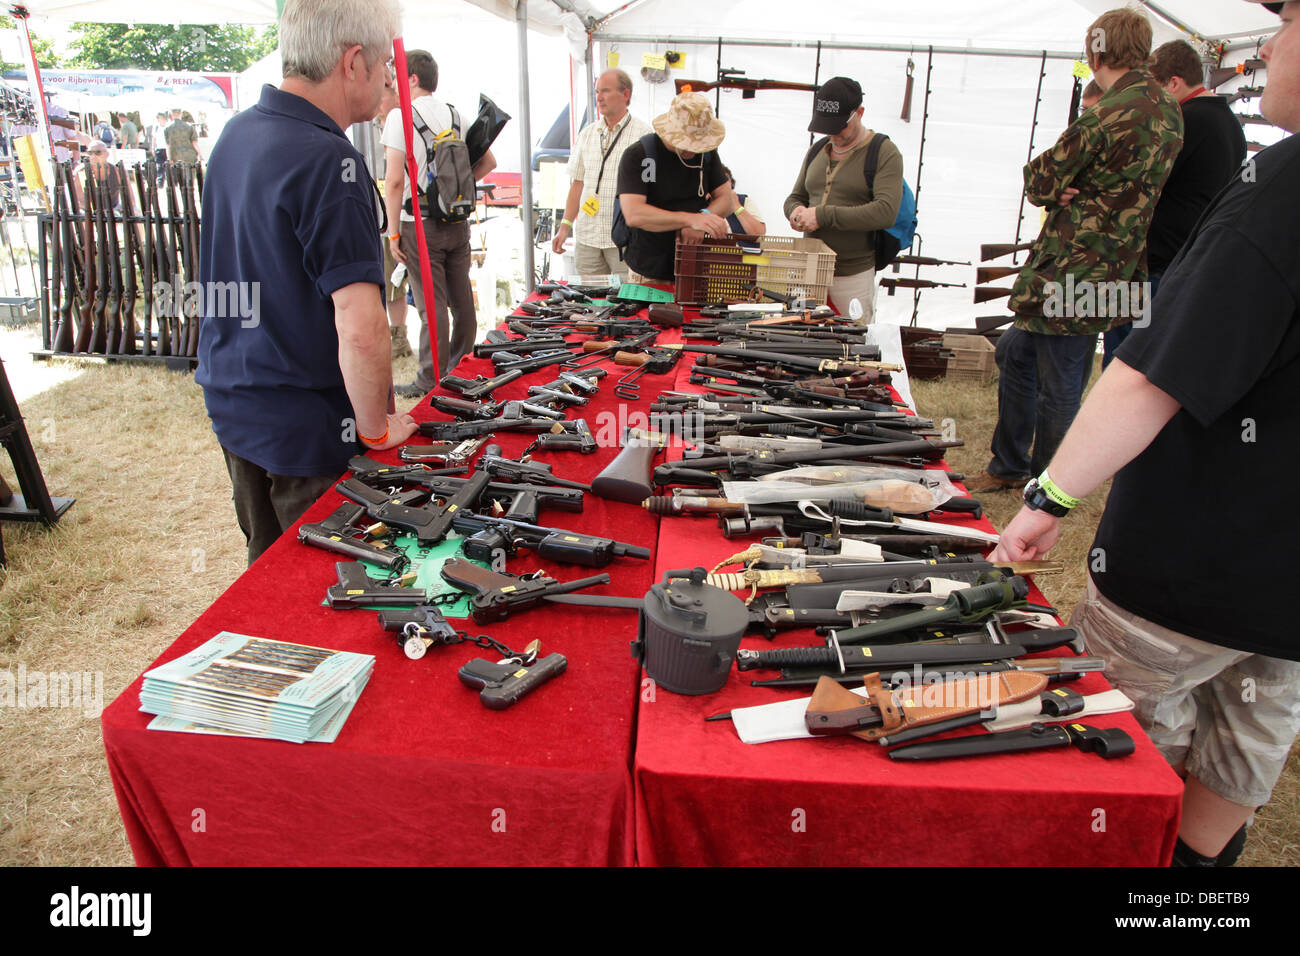 People looking at guns at a Military and Arms Fair Stock Photo